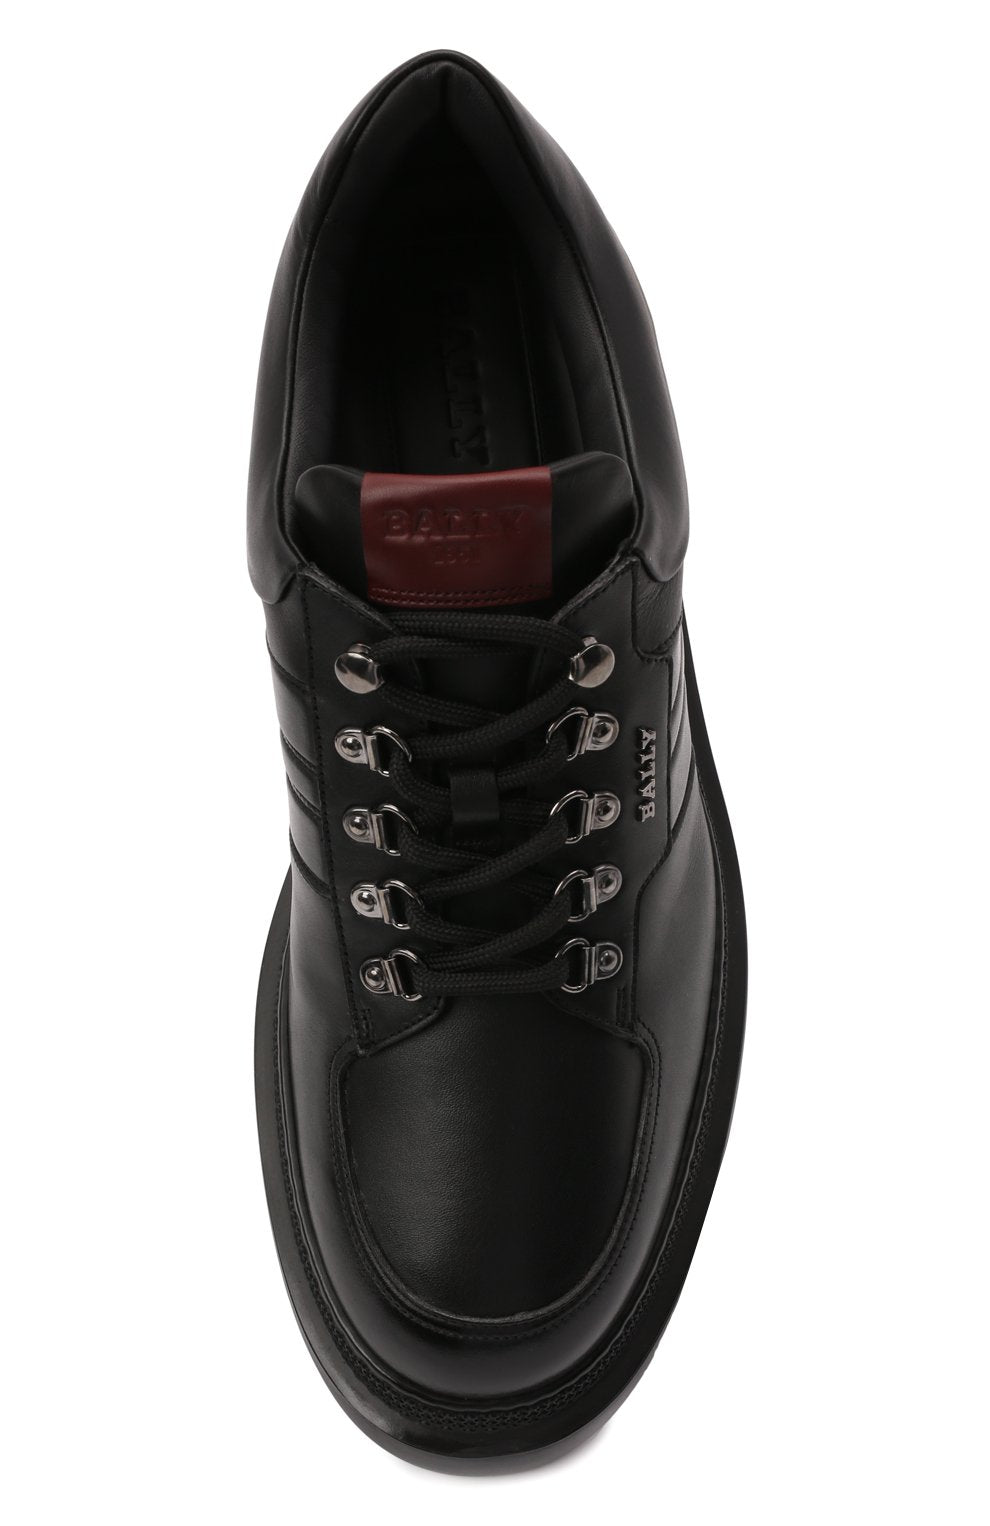 Bally Valnis Men's Shoes- Black